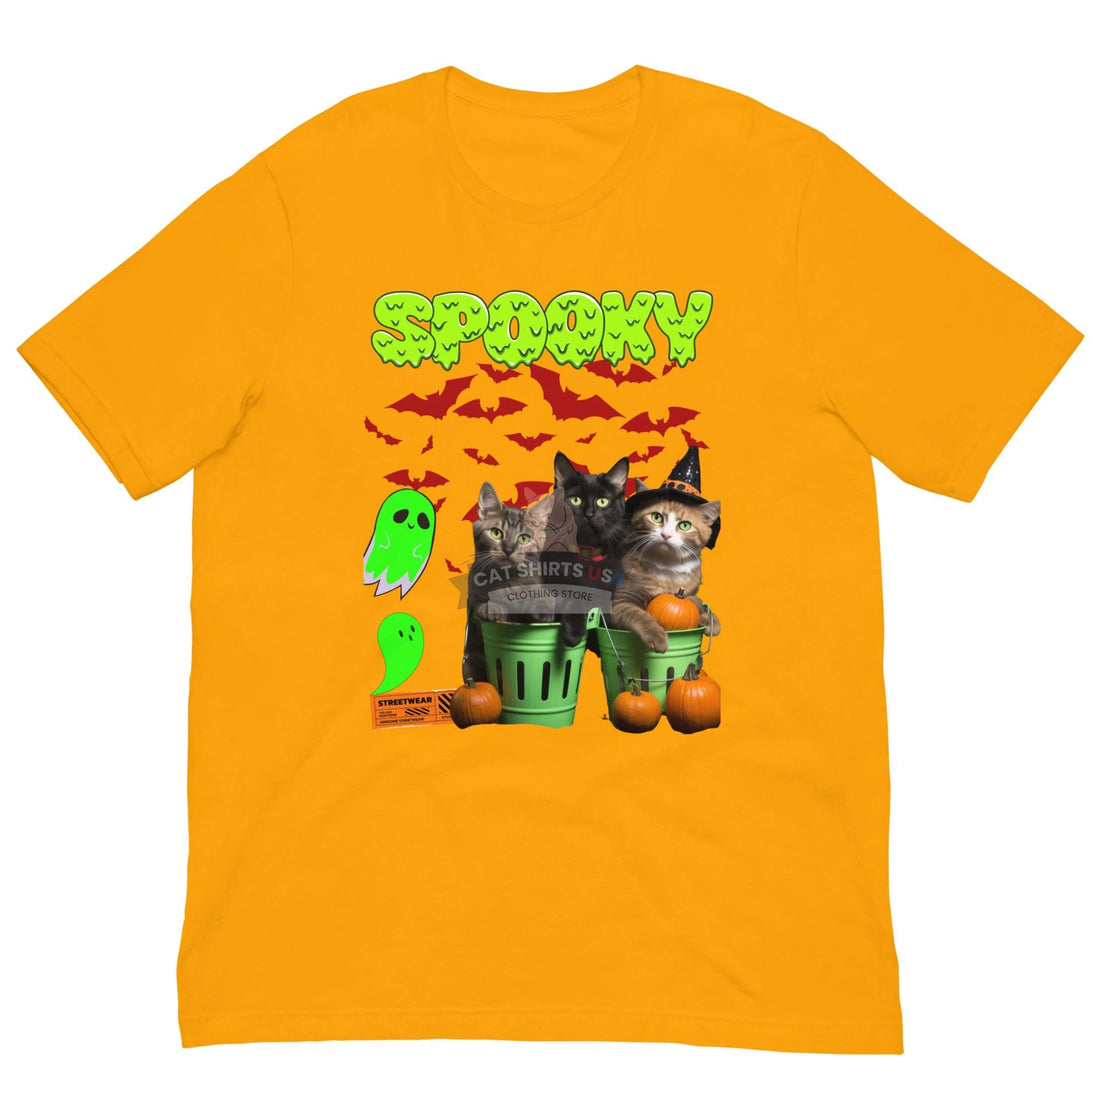 Spooky Halloween Cat Shirt - Cat Shirts USA